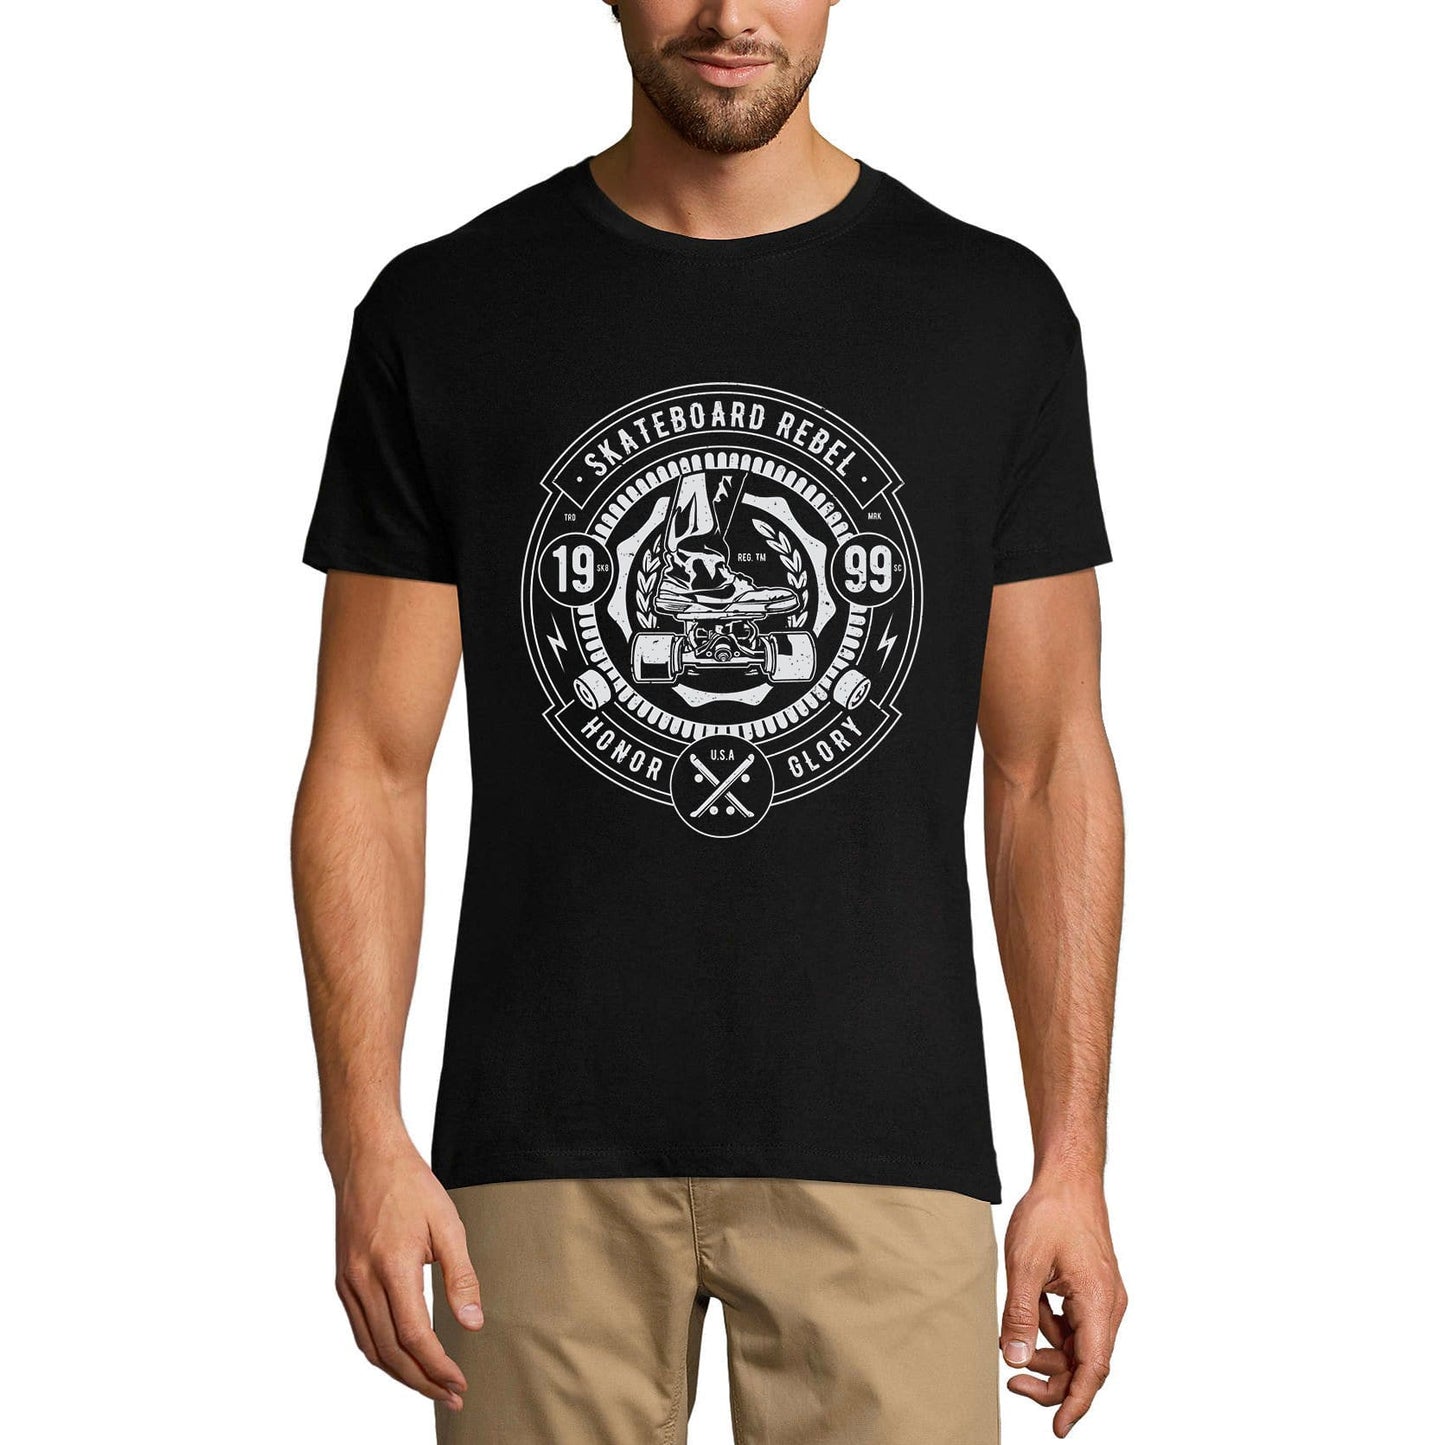 ULTRABASIC Herren T-Shirt Skateboard Rebel 1999 – USA Honor Glory T-Shirt